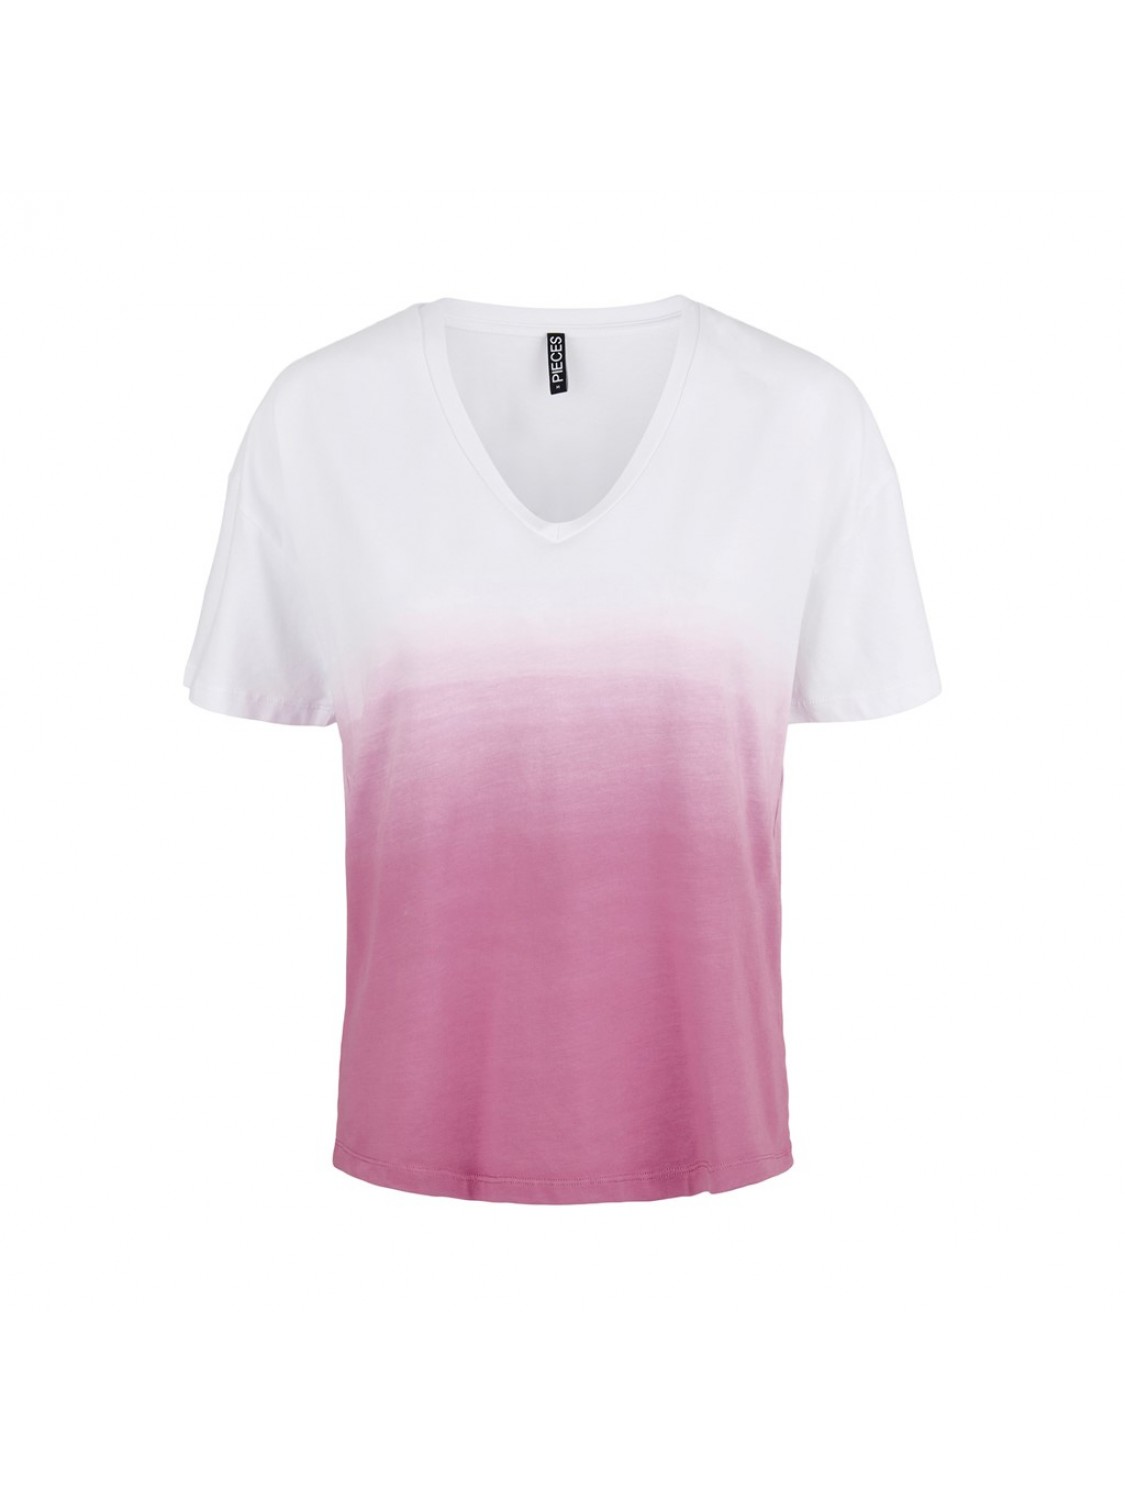 Camiseta Vabba rosa